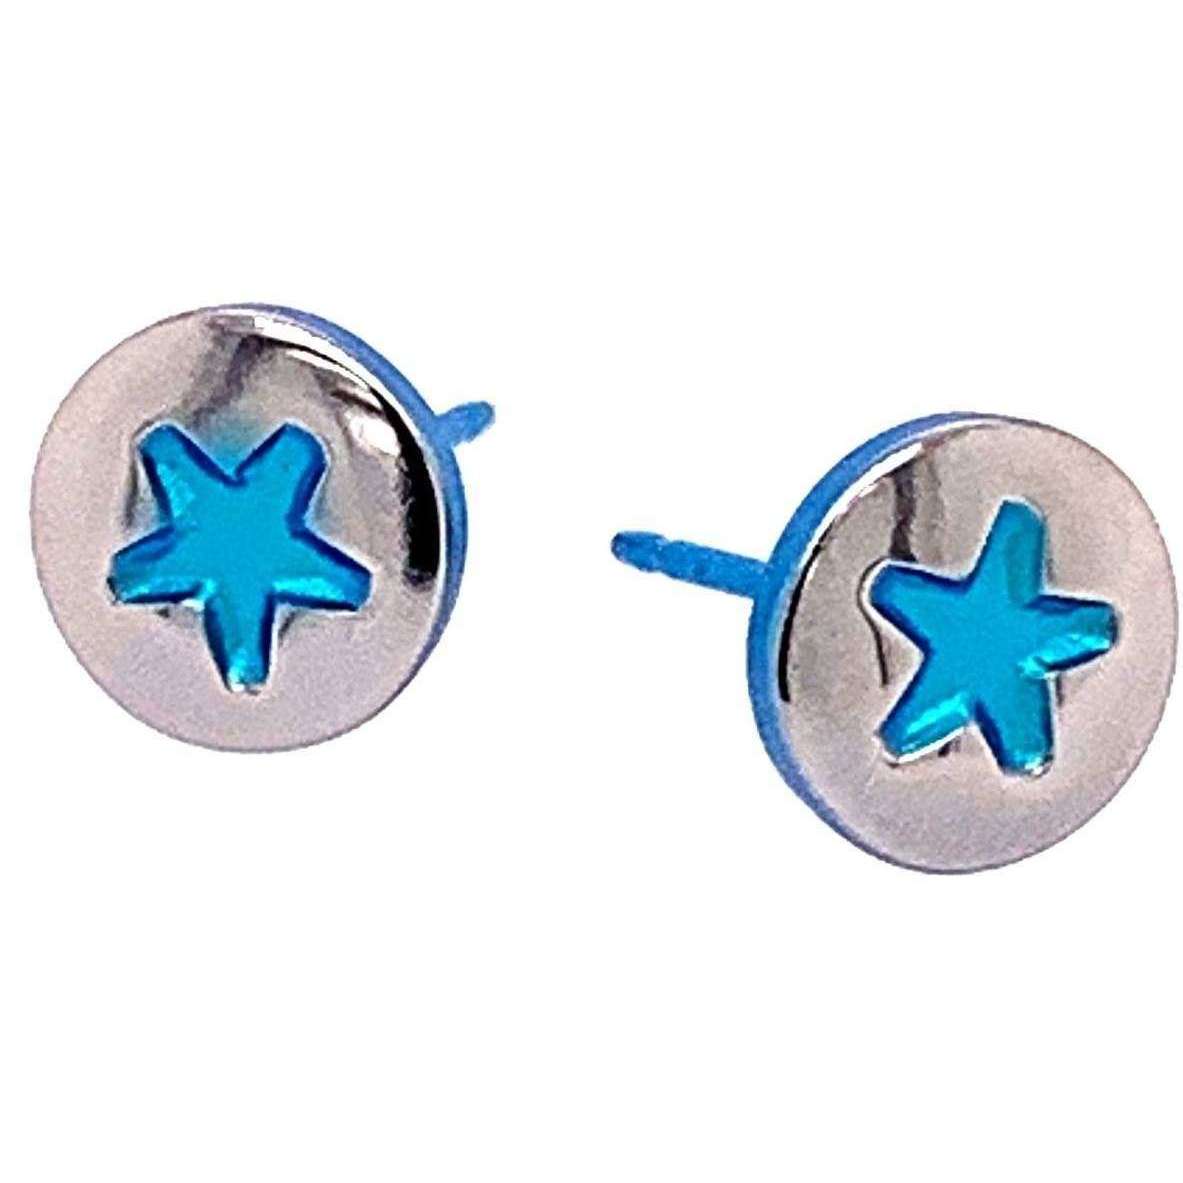 Ti2 Titanium Star Stud Earrings - Blue